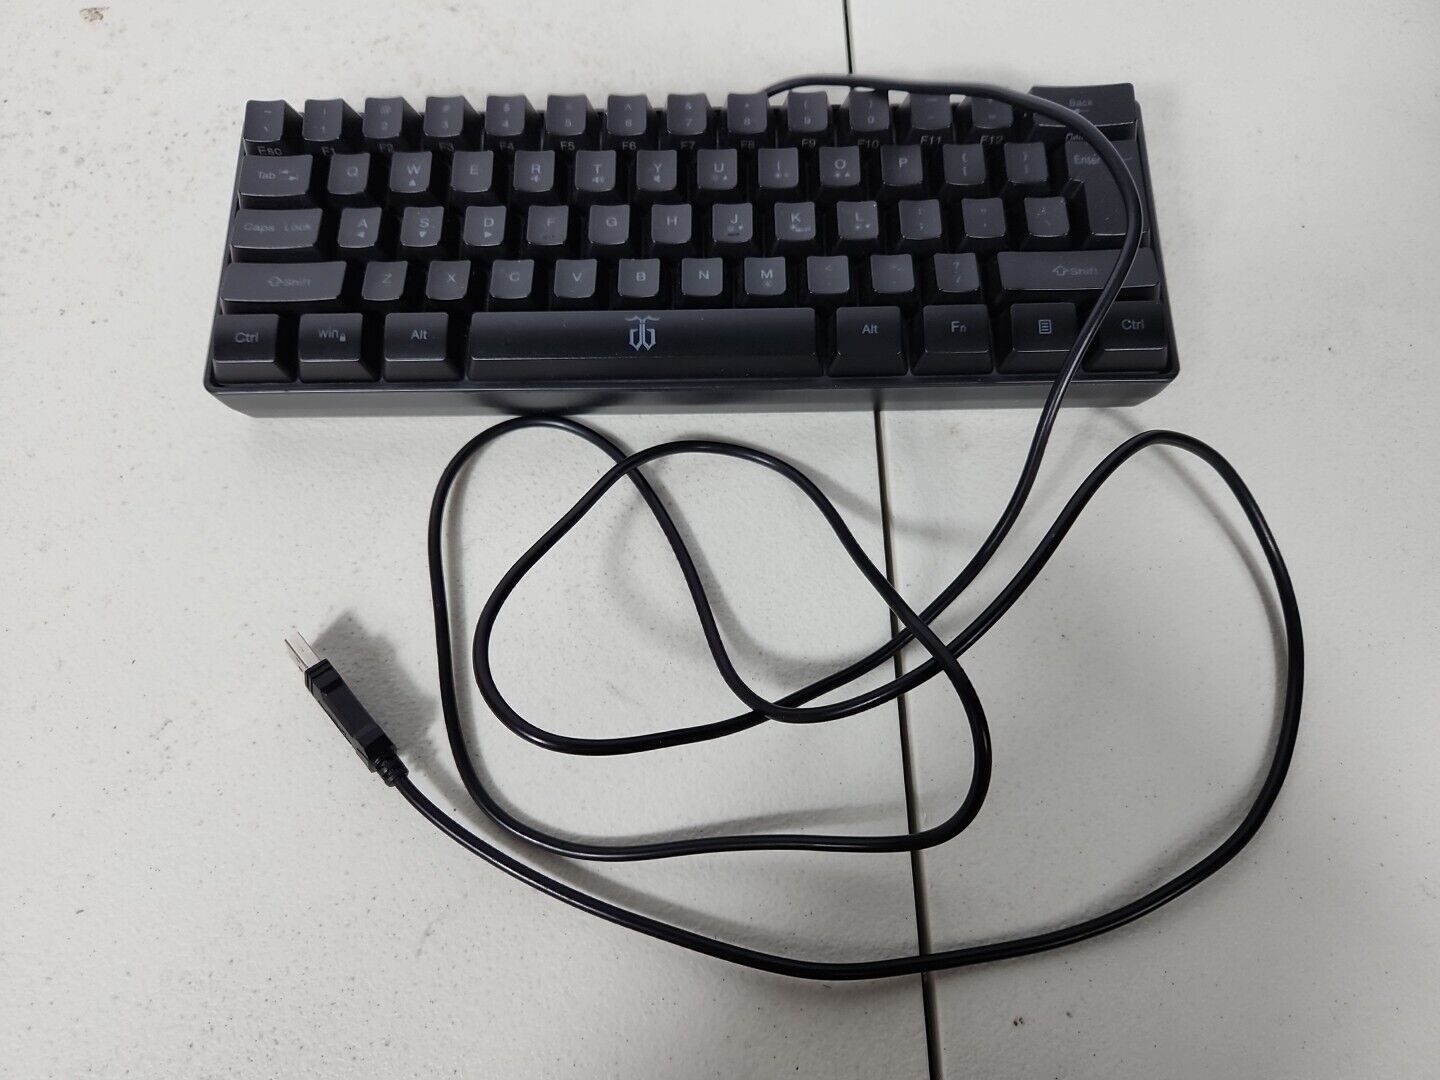 60% Wired Gaming Keyboard RGB Backlit Ultra-Compact Mini Keyboard